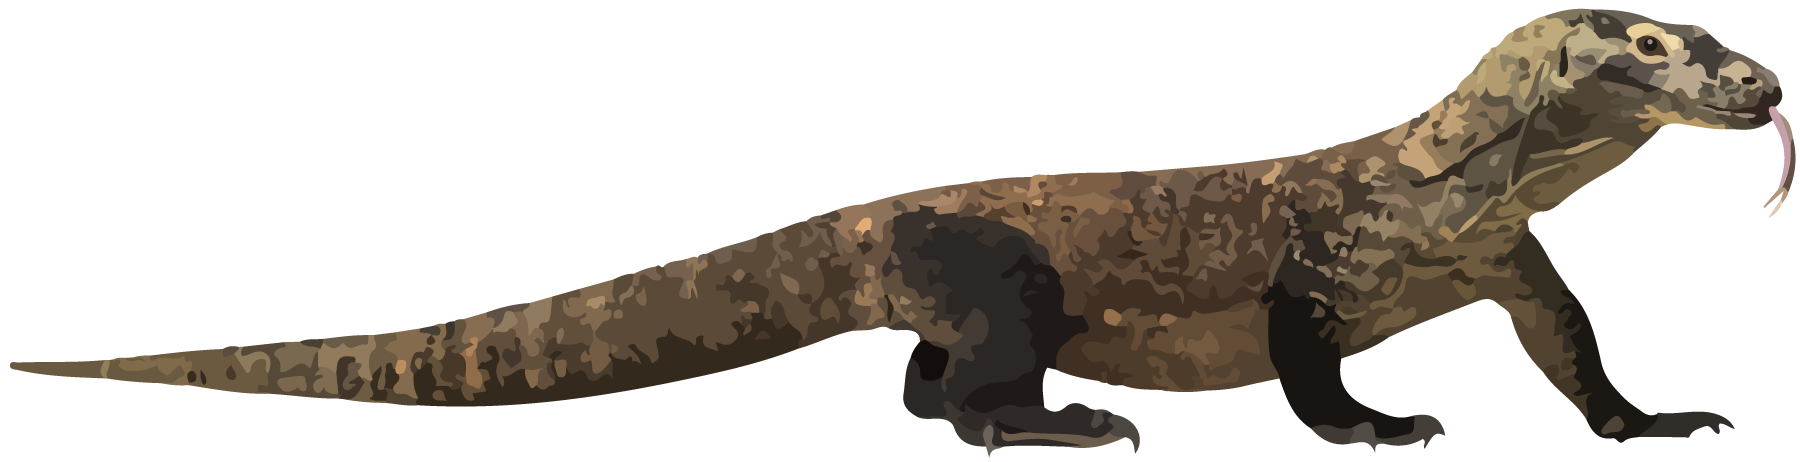 Reptile, Komodo dragon.